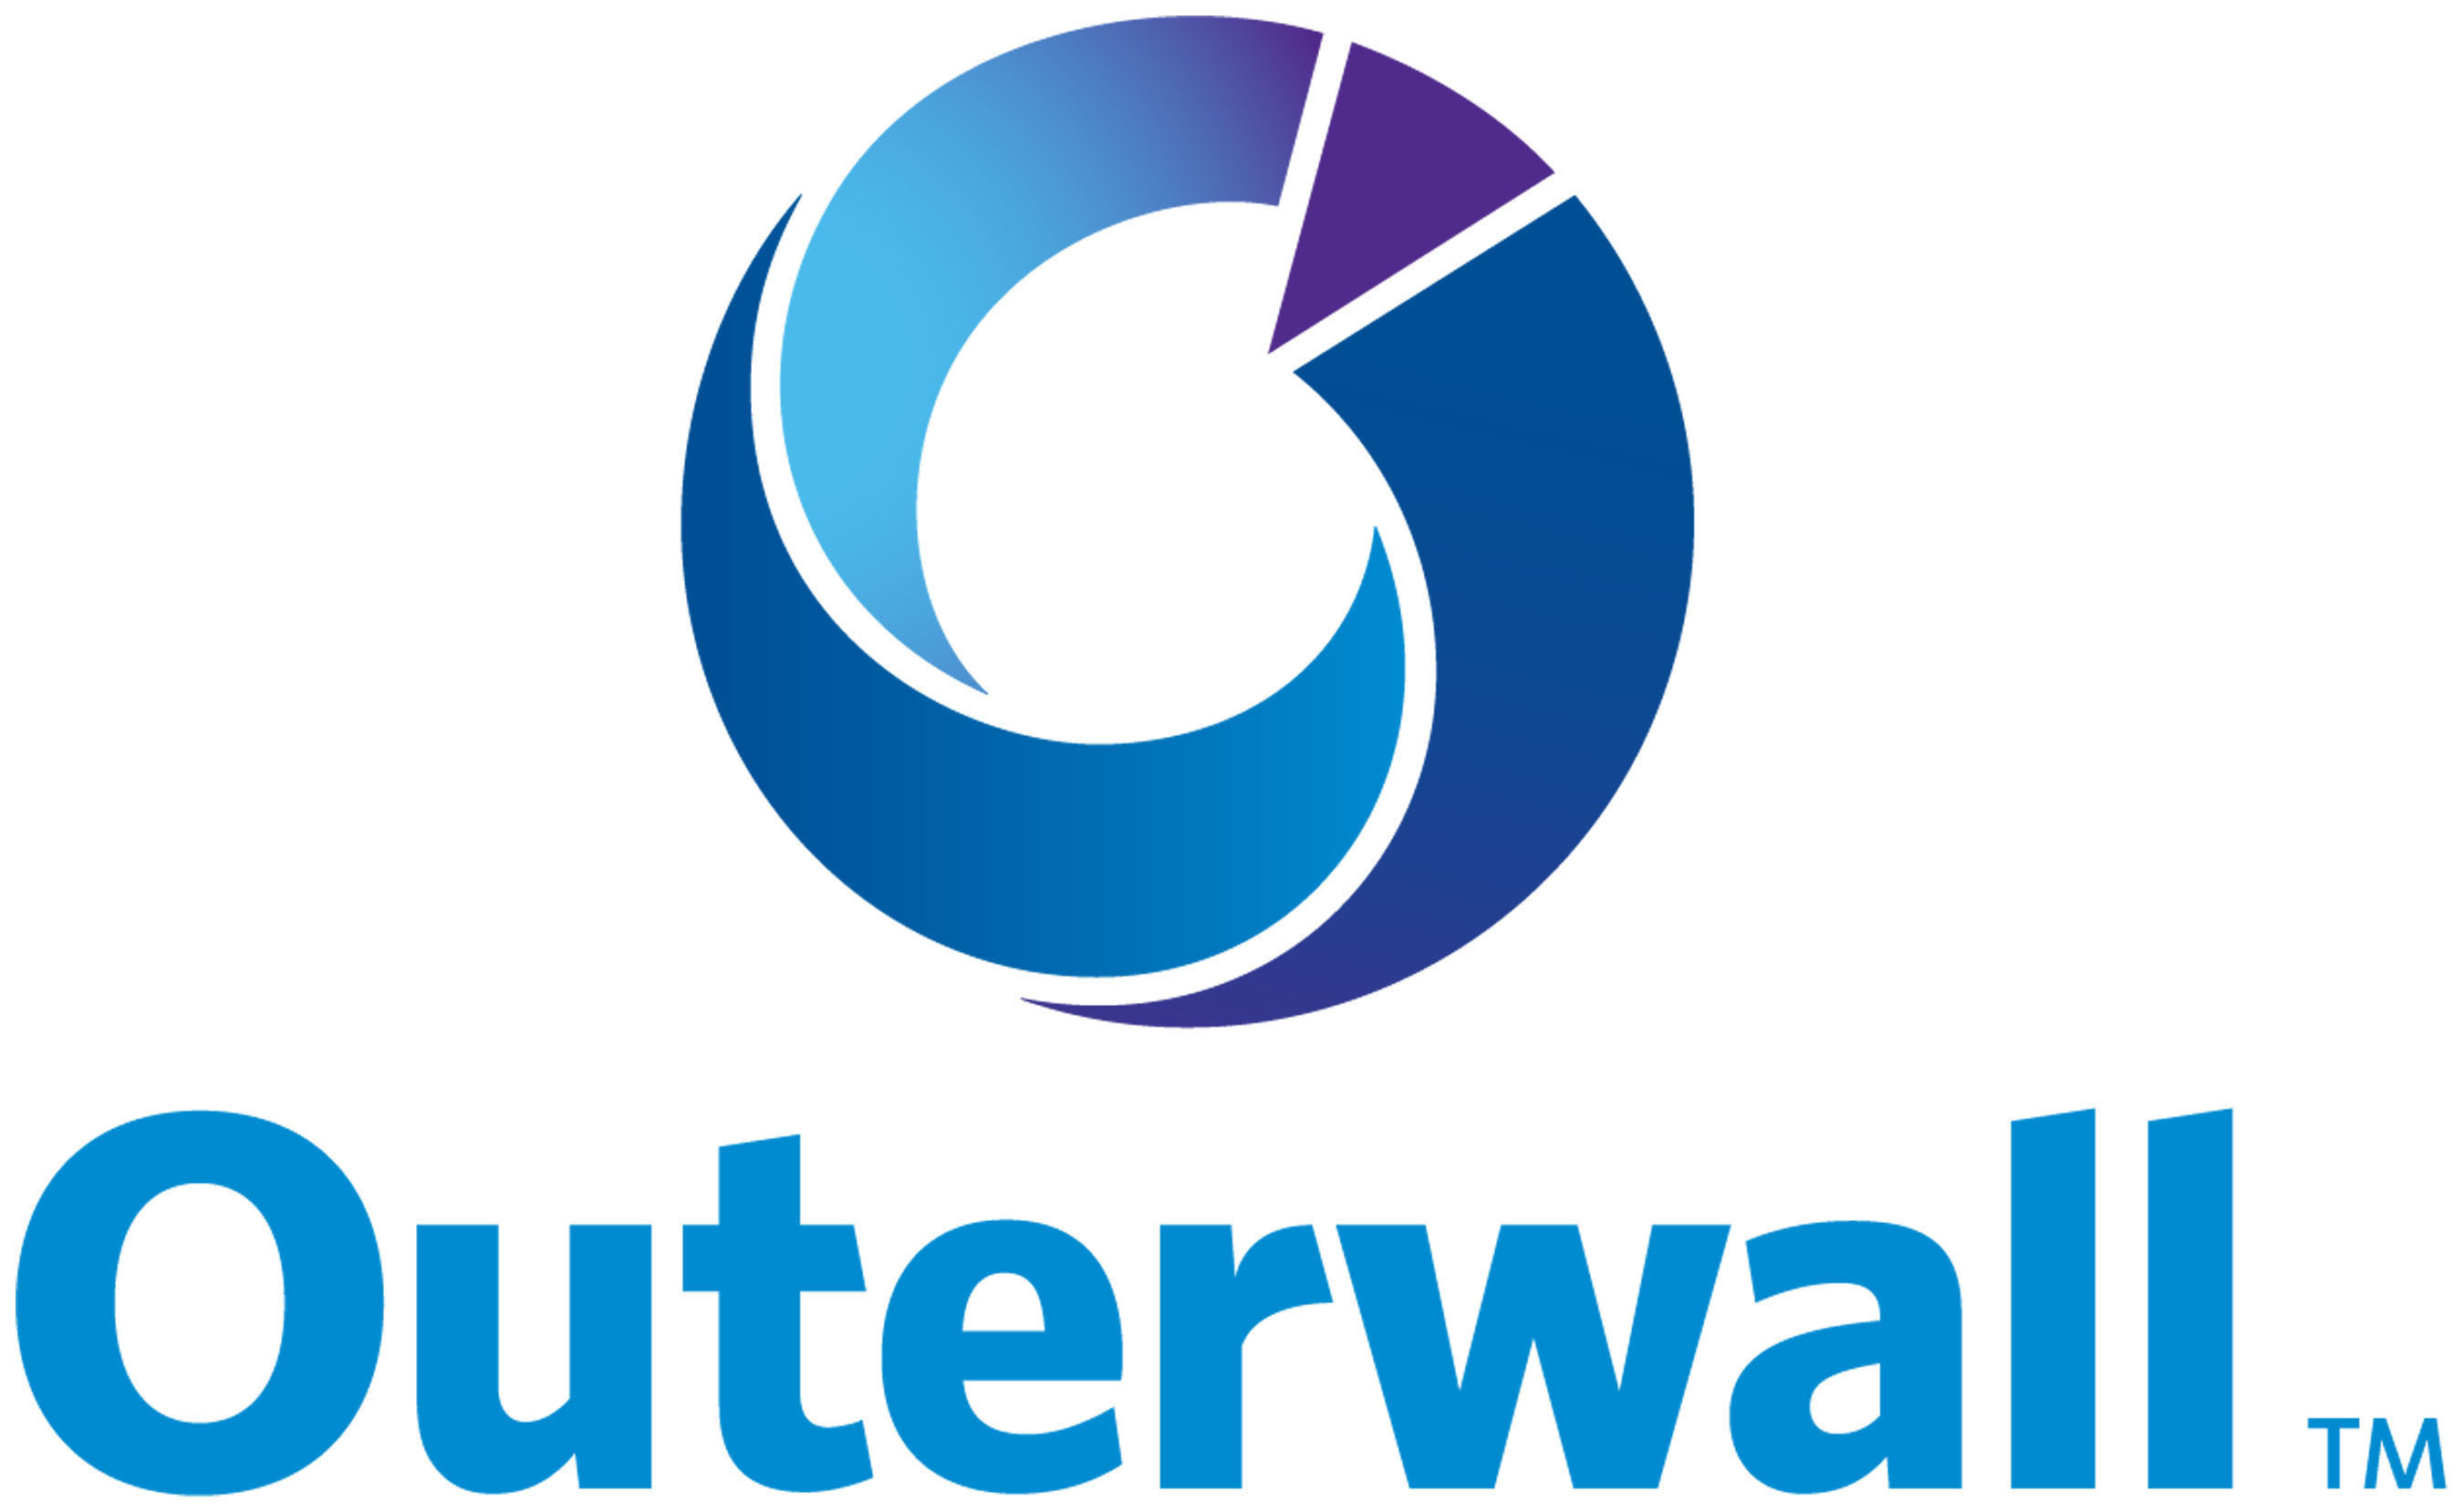 Outerwall Inc. logo. (PRNewsFoto/Outerwall Inc.) (PRNewsFoto/)